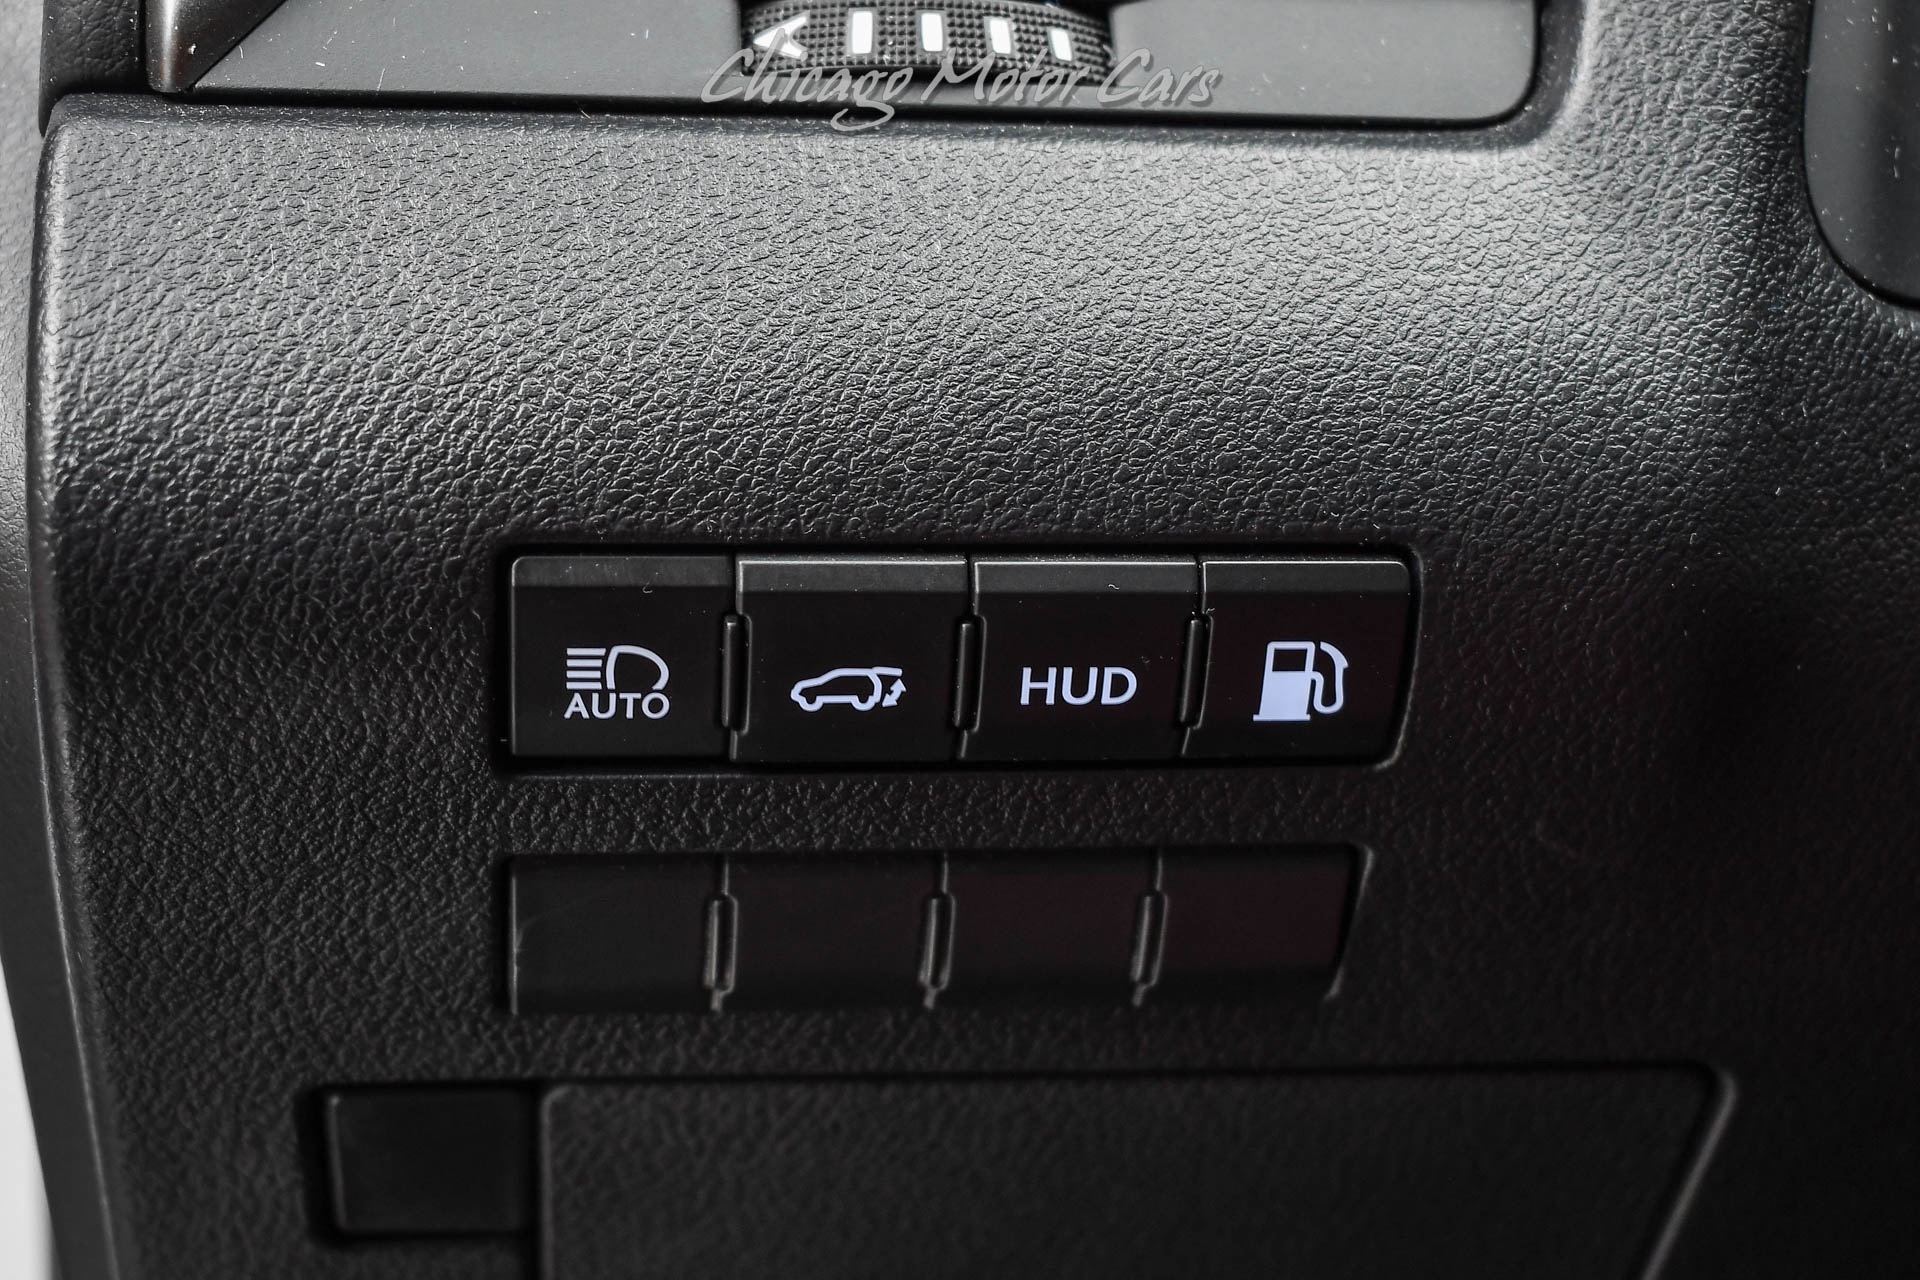 Used-2020-Lexus-RX450h-F-SPORT-Hybrid-SUV-Mark-Levinson-Audio-Cold-Weather-Pkg-New-TIres